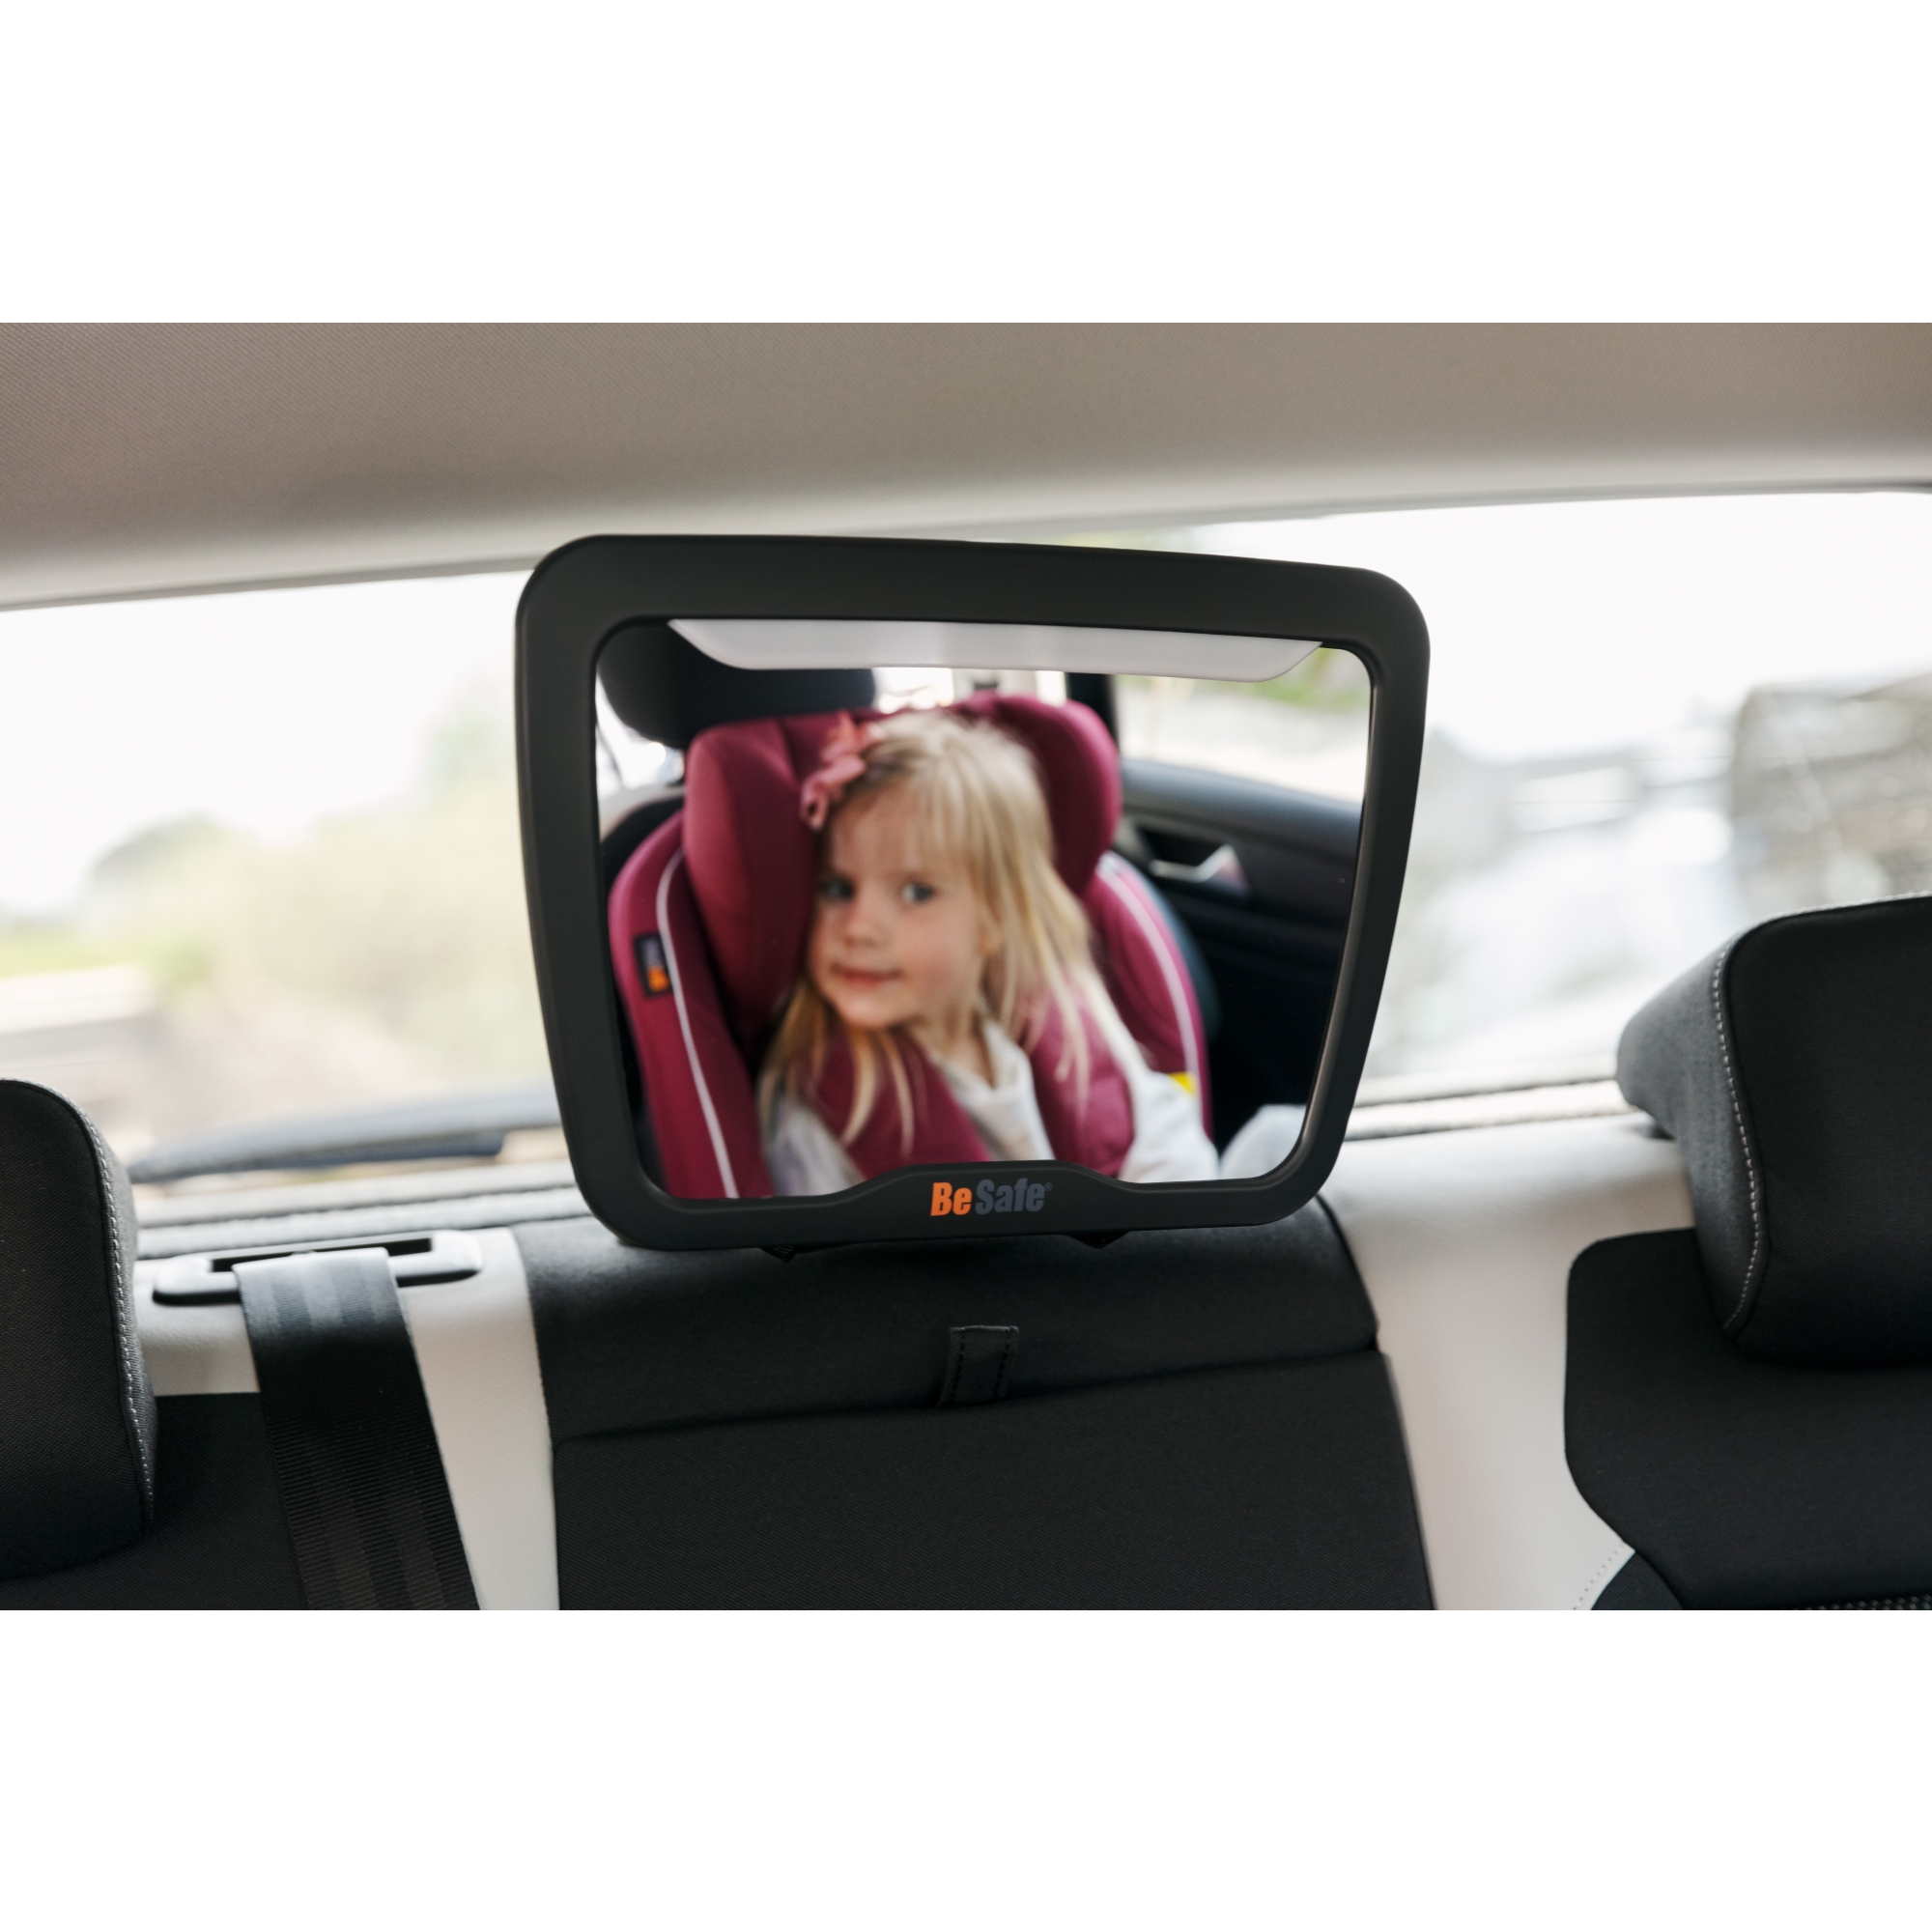 BeSafe BeSafe Baby Mirror XL2, rétroviseur de voiture